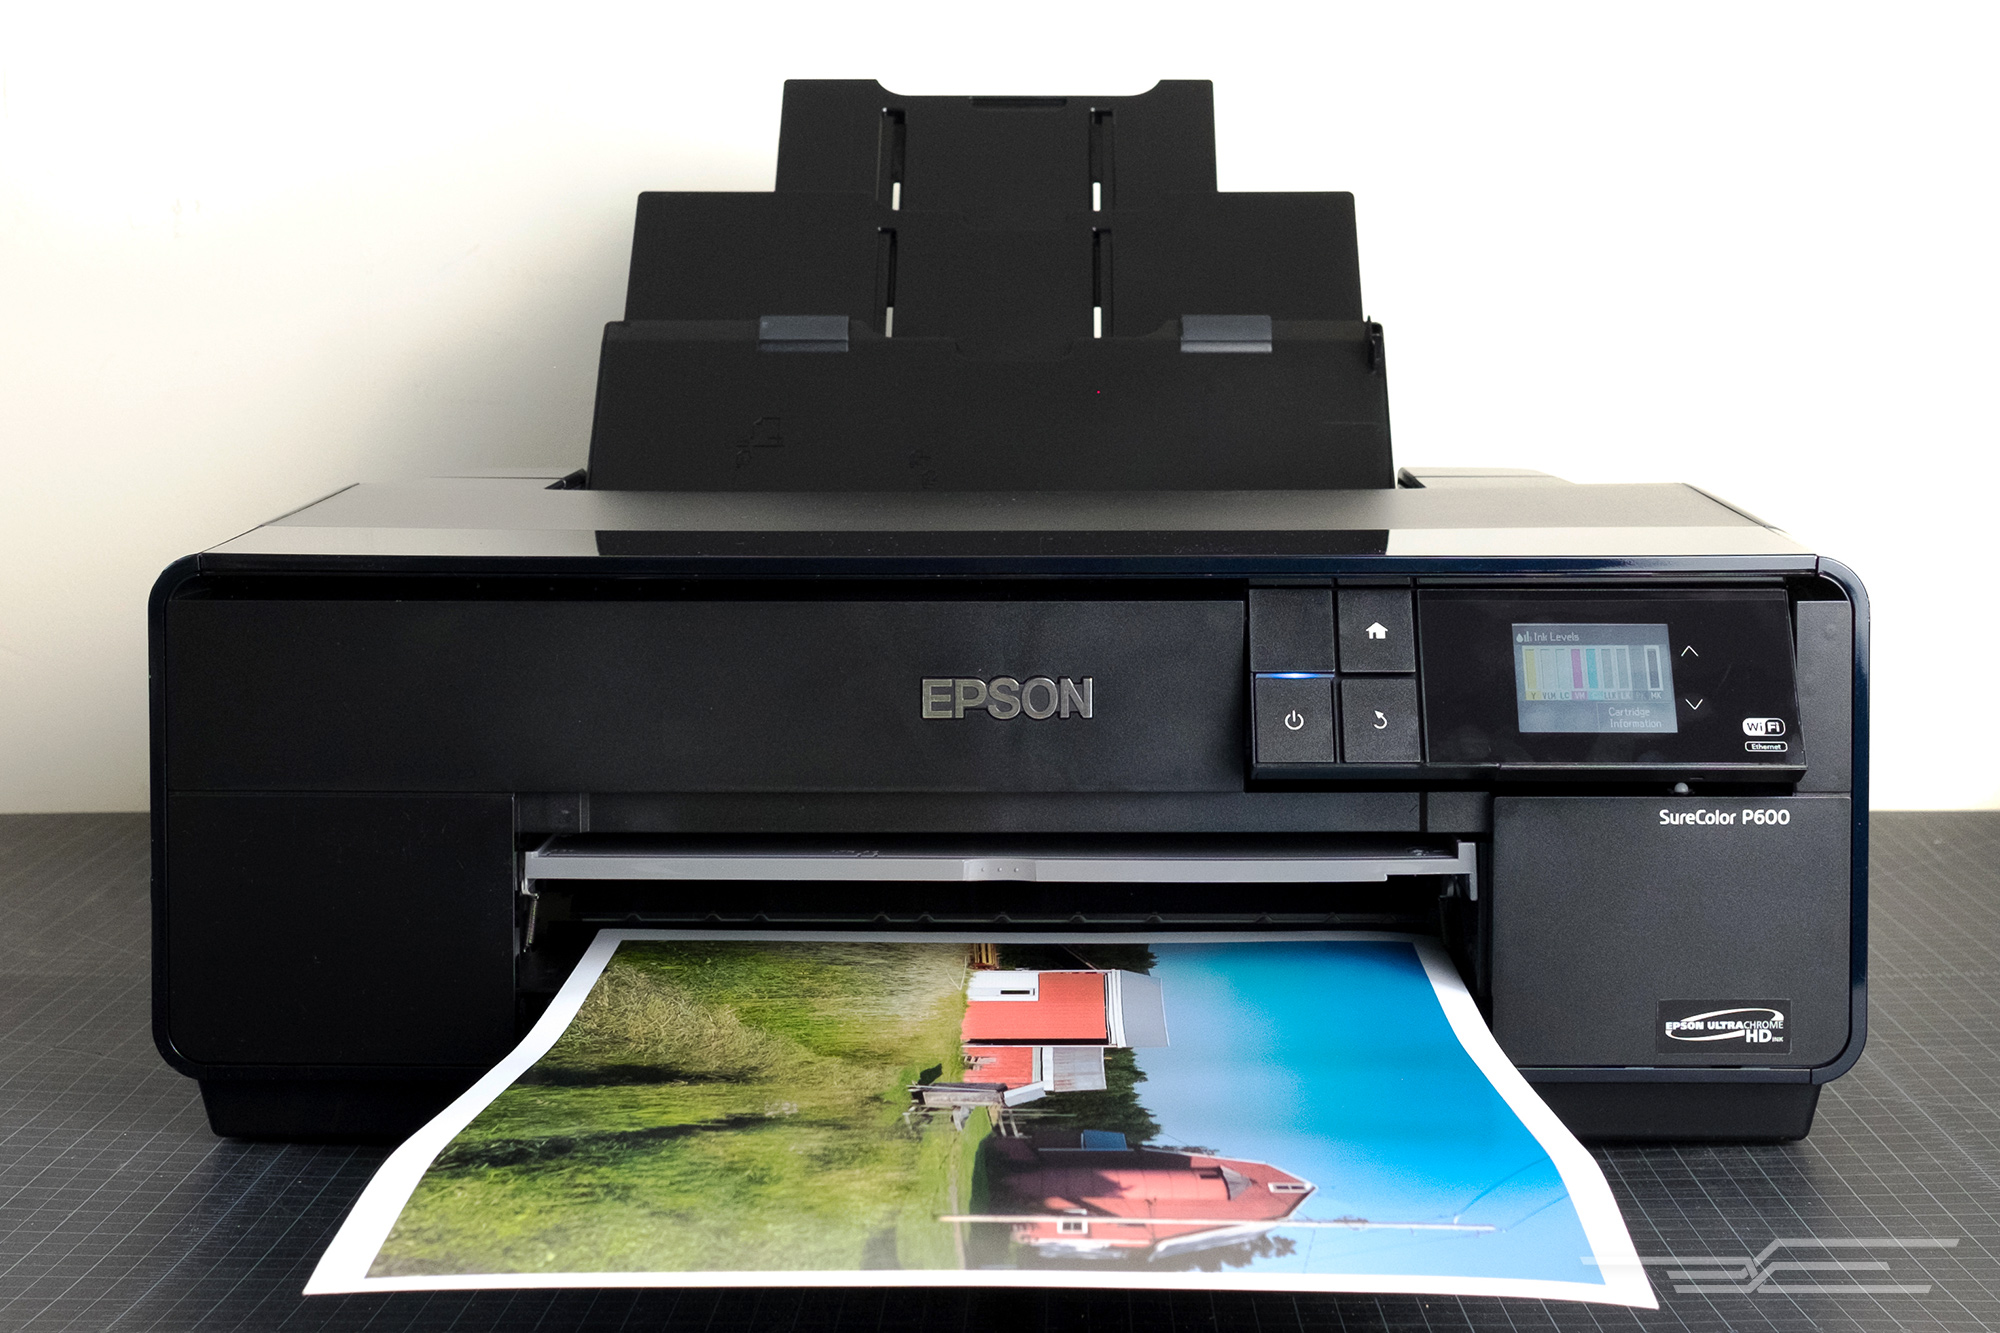 The best printer Engadget